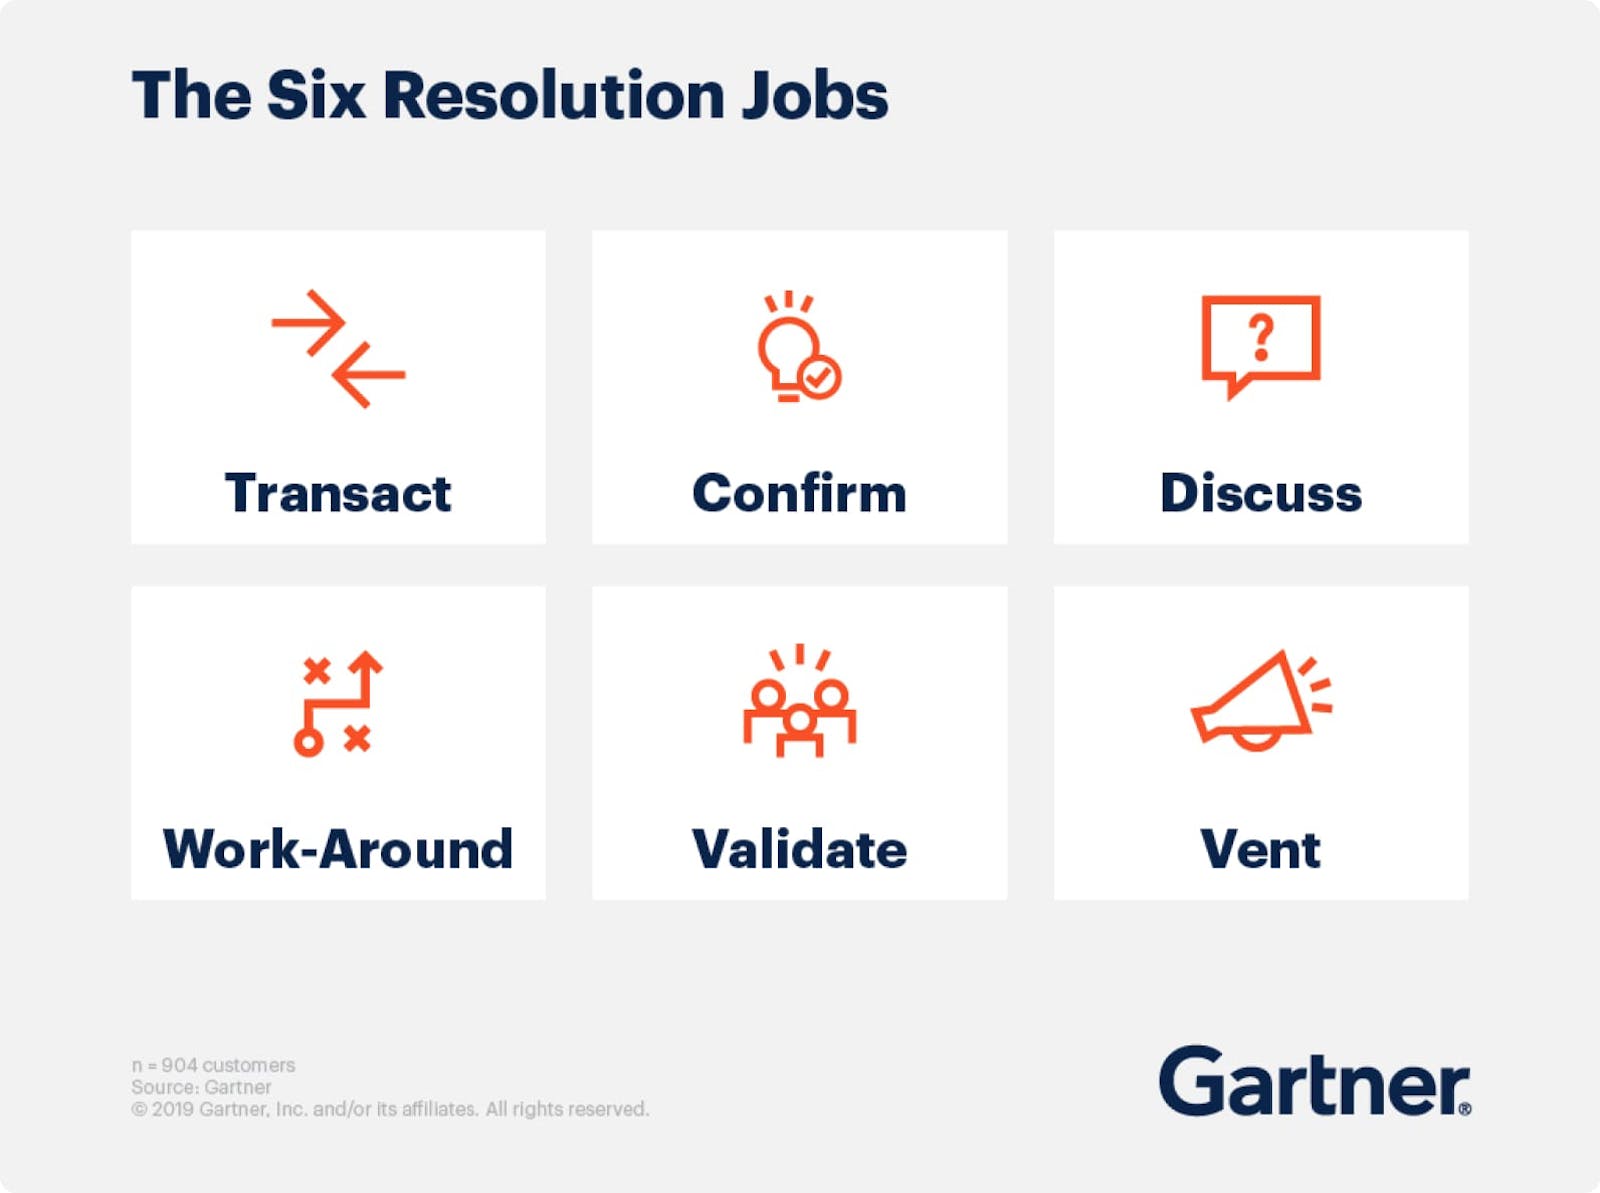 The Six Resolution Jobs